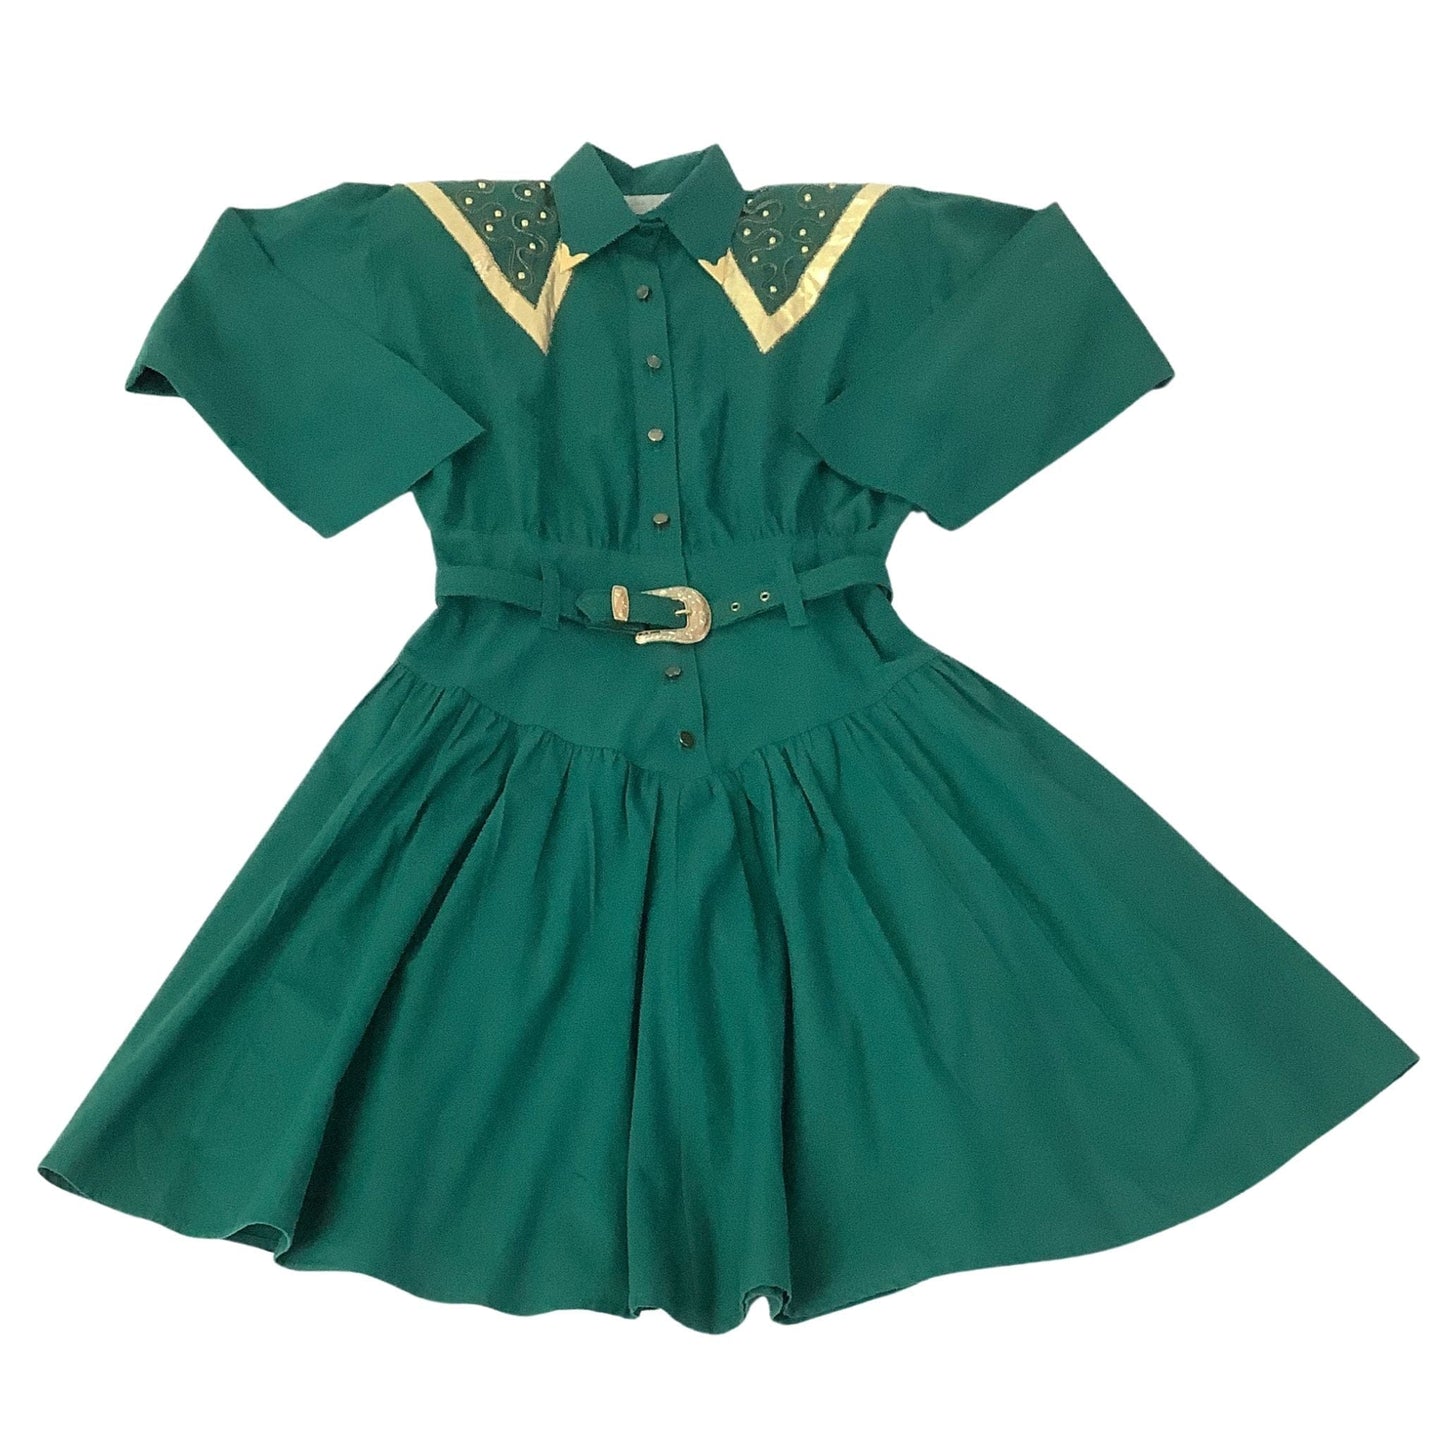 Lilia Smitty Green Dress Small / Green / Western